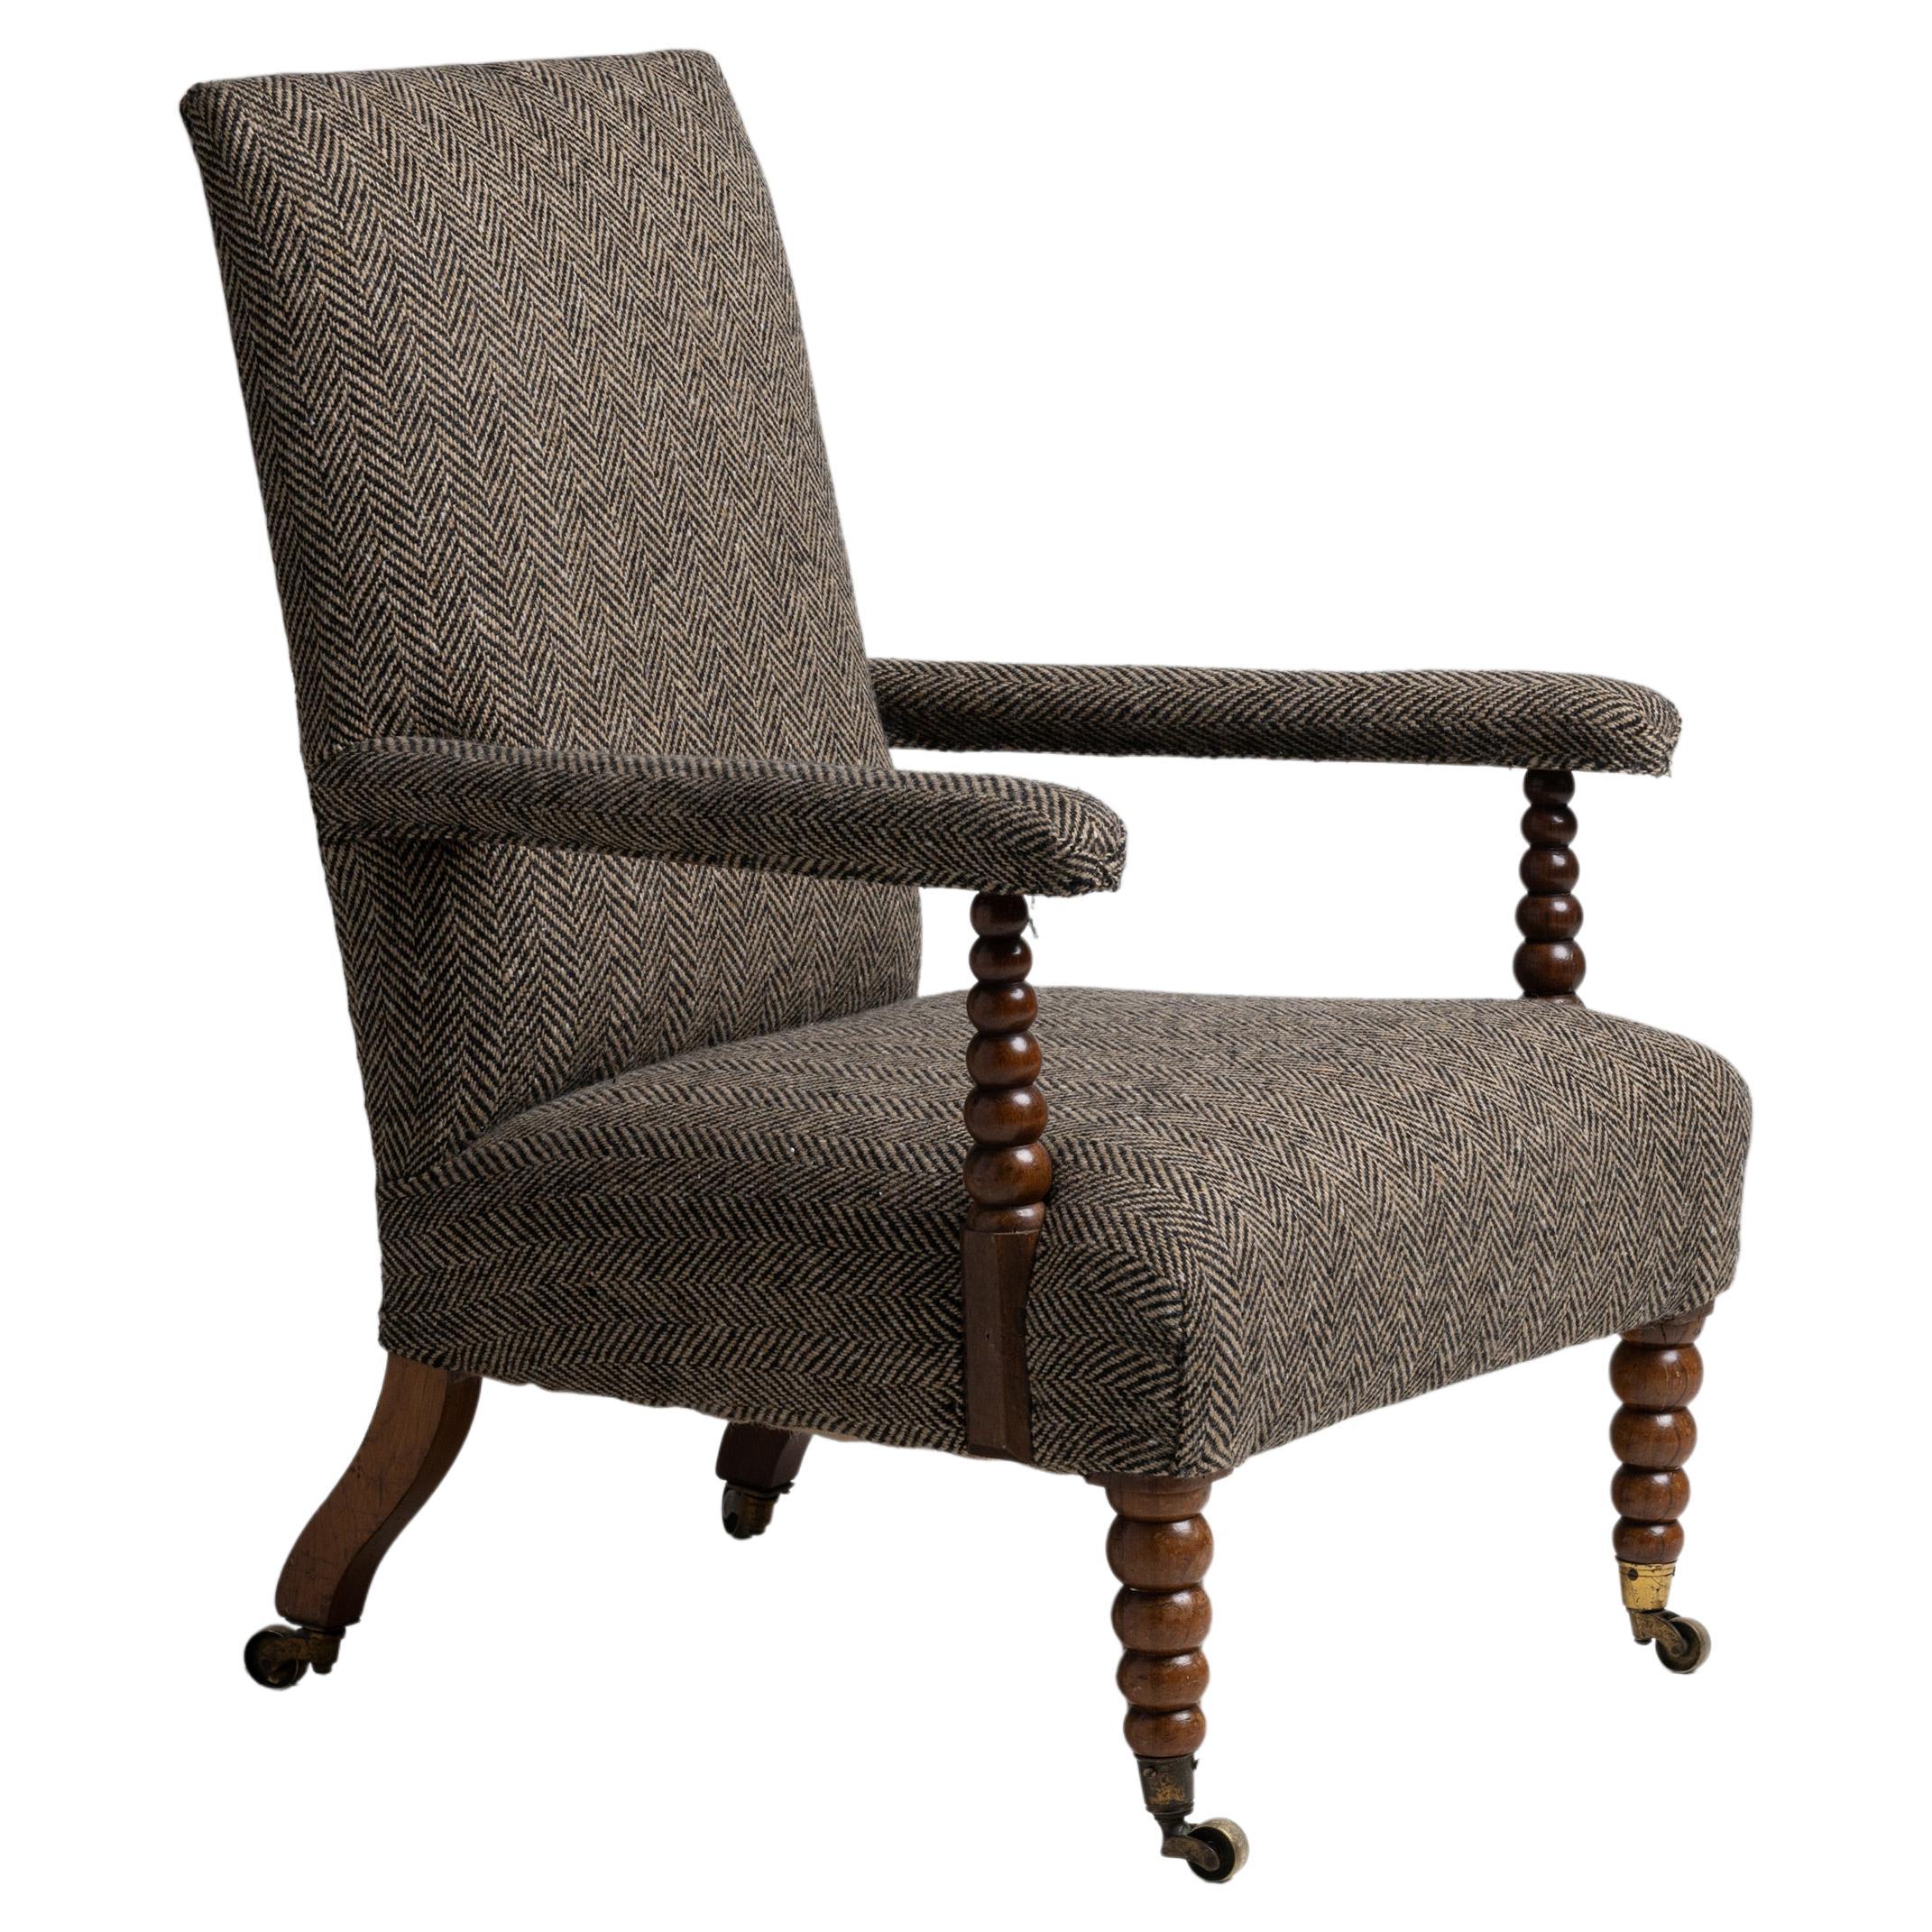 Walnut Bobbin Chair in Virgin Wool Herringbone by Pierre Frey, England 1820